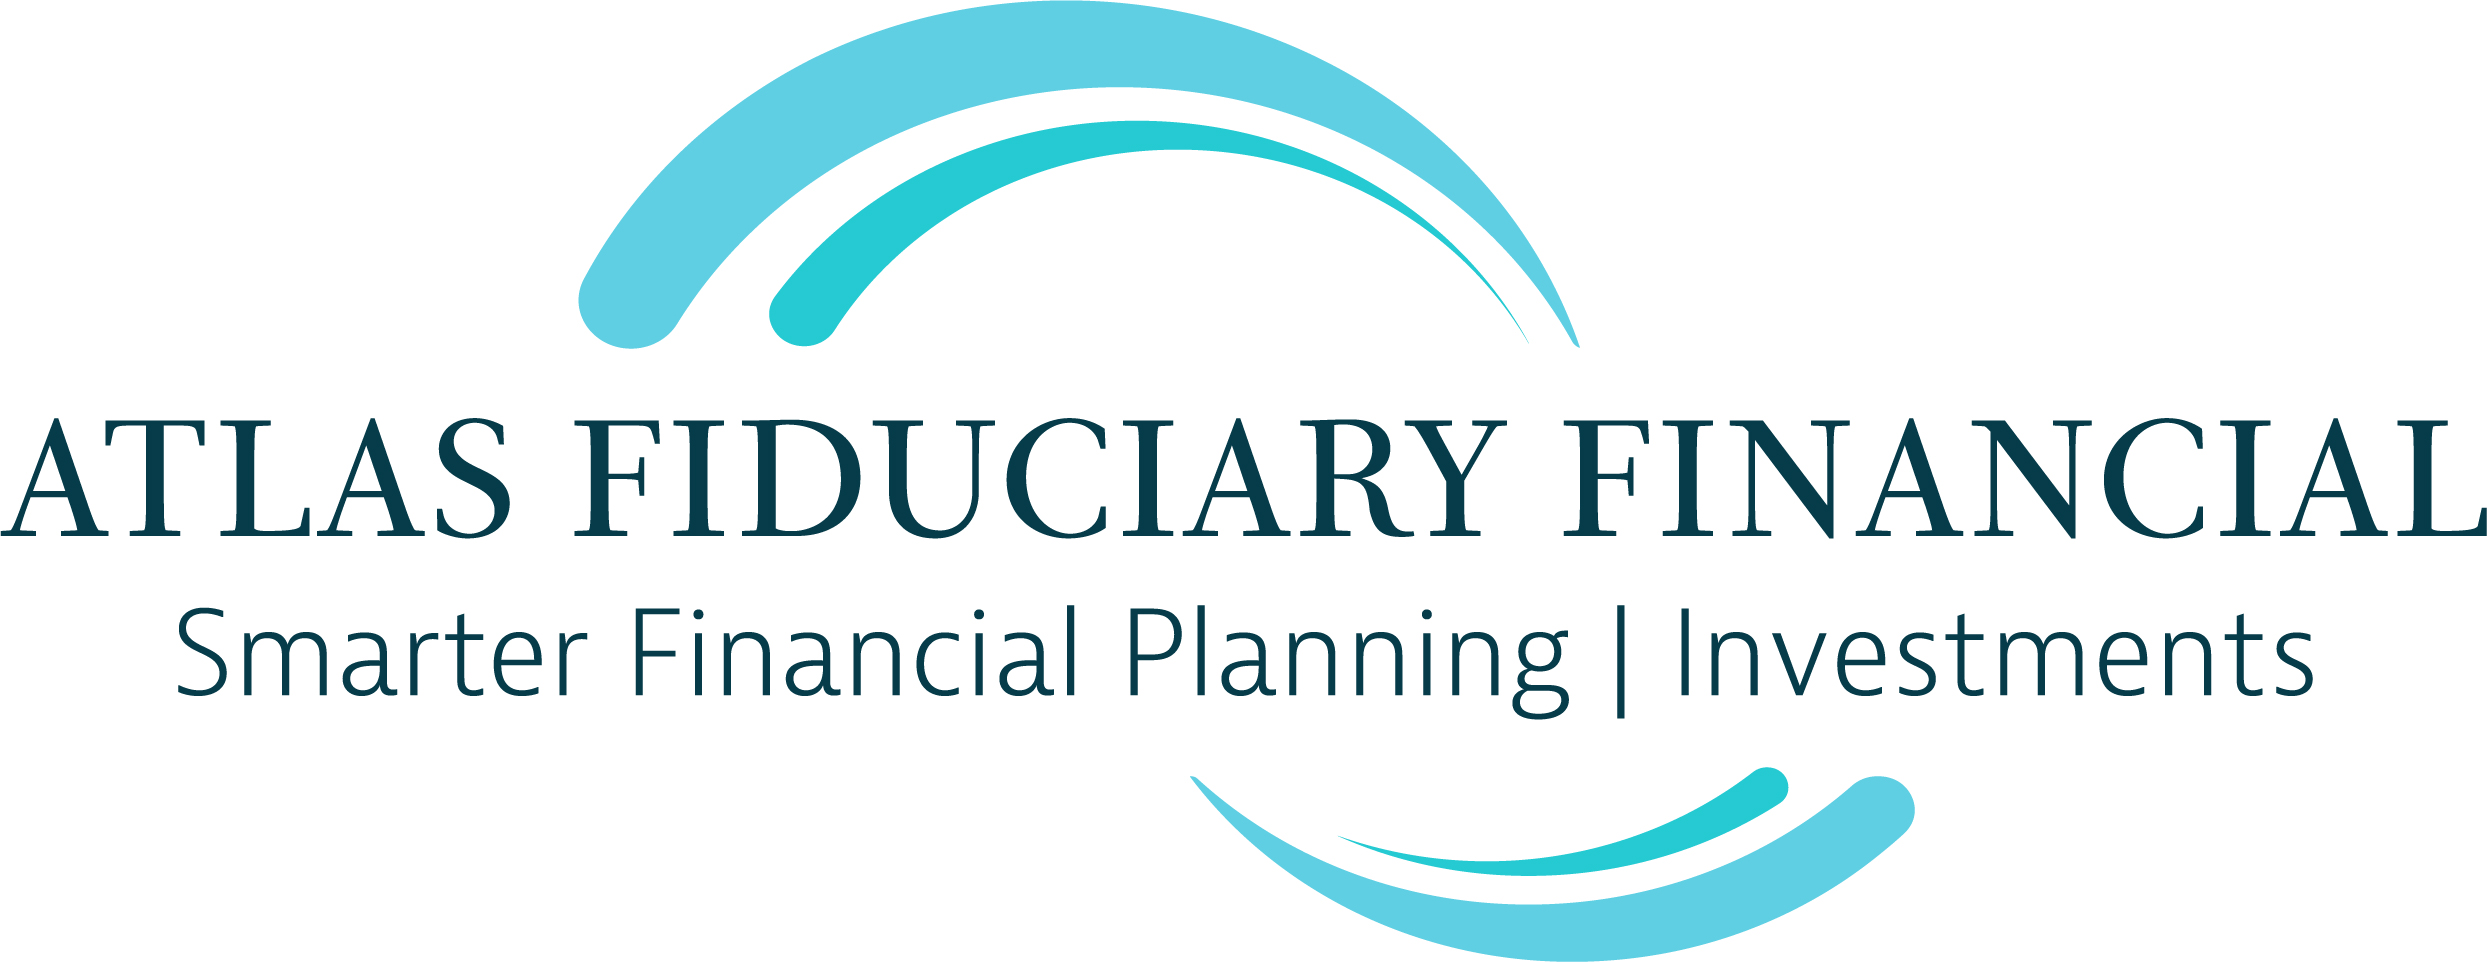 Atlas Fiduciary Financial LLC.